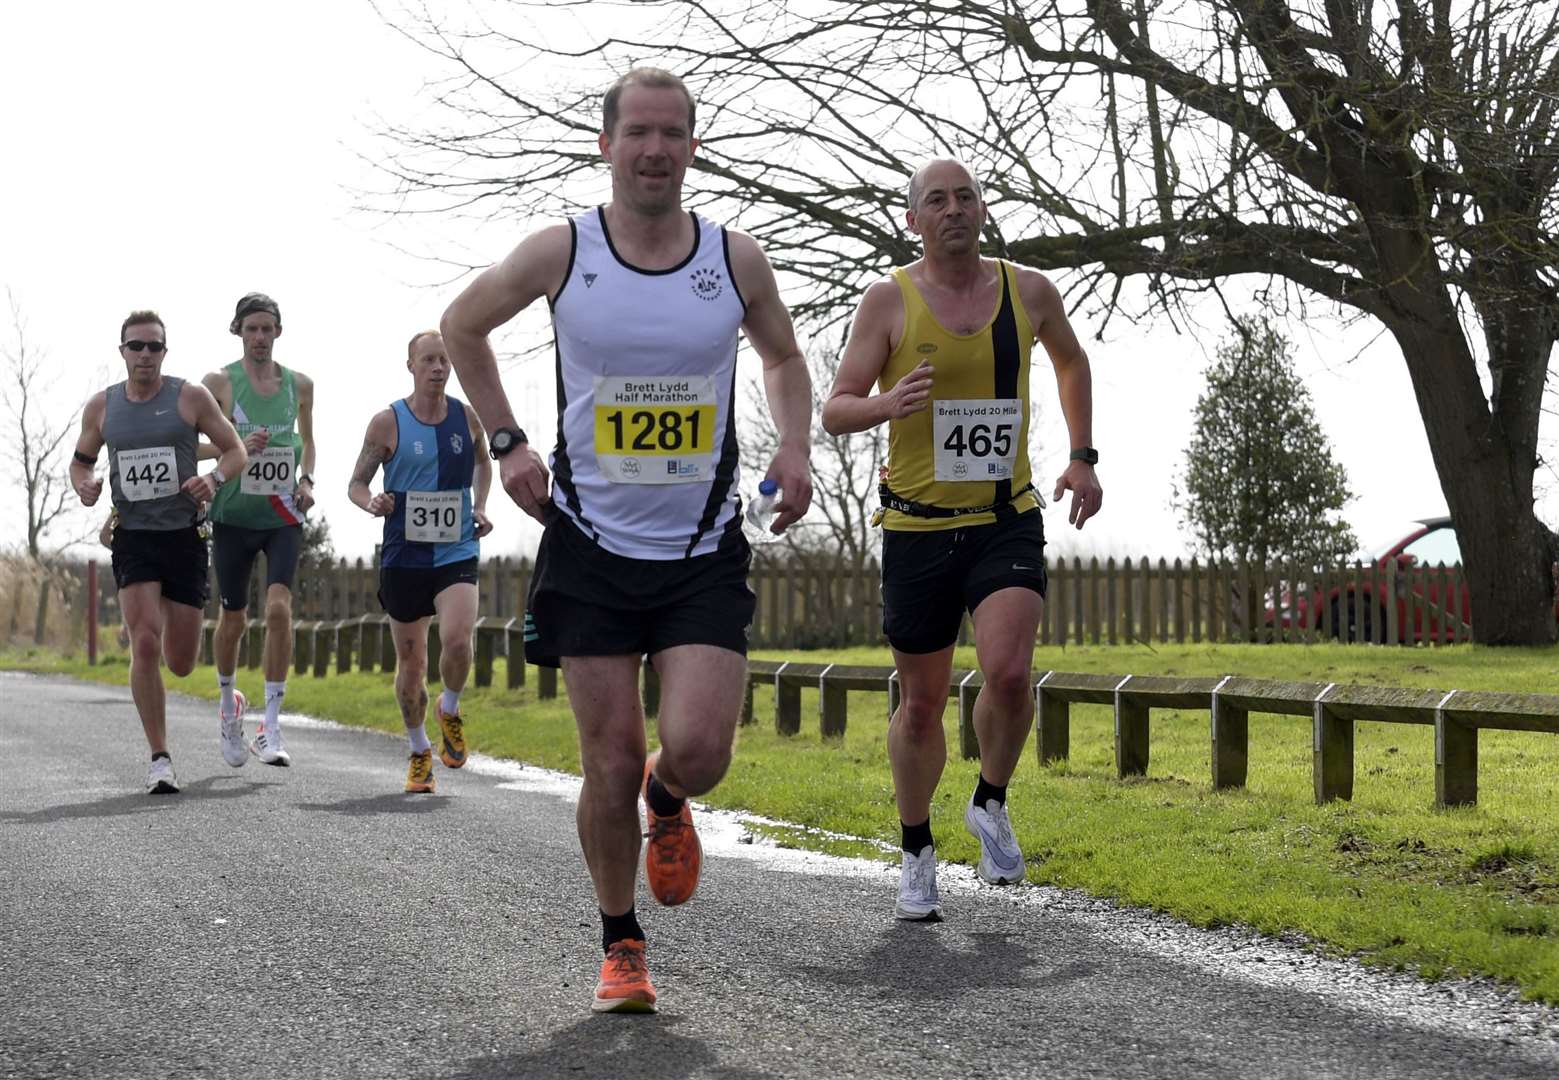 No.1281, half-marathon winner Chris Edwards of Dover RoadRunners. Picture: Barry Goodwin (62961912)